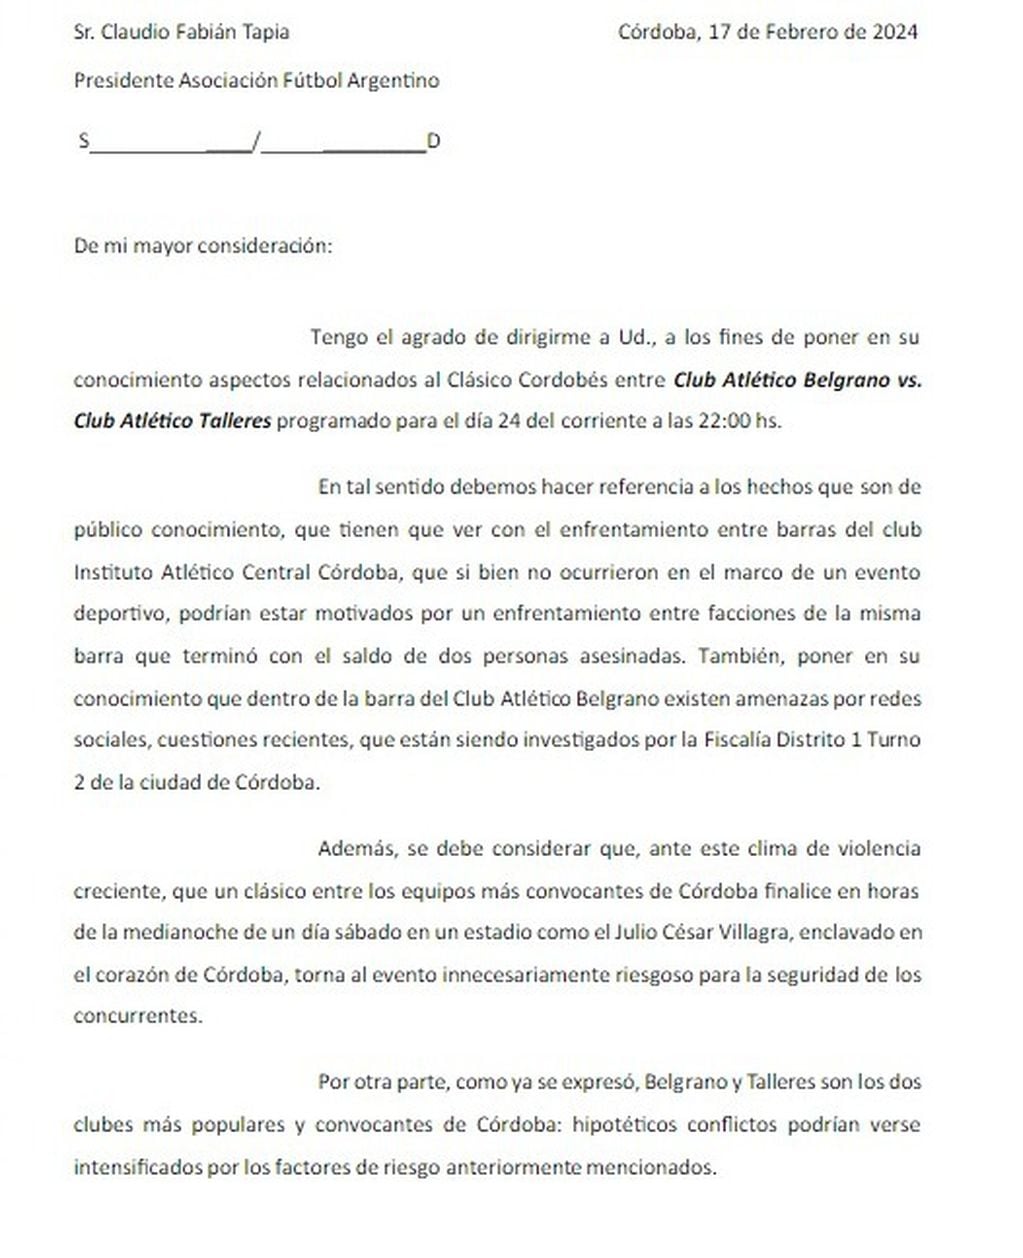 El mensaje del ministro de Seguridad de la provincia de Córdoba al presidente de la AFA.